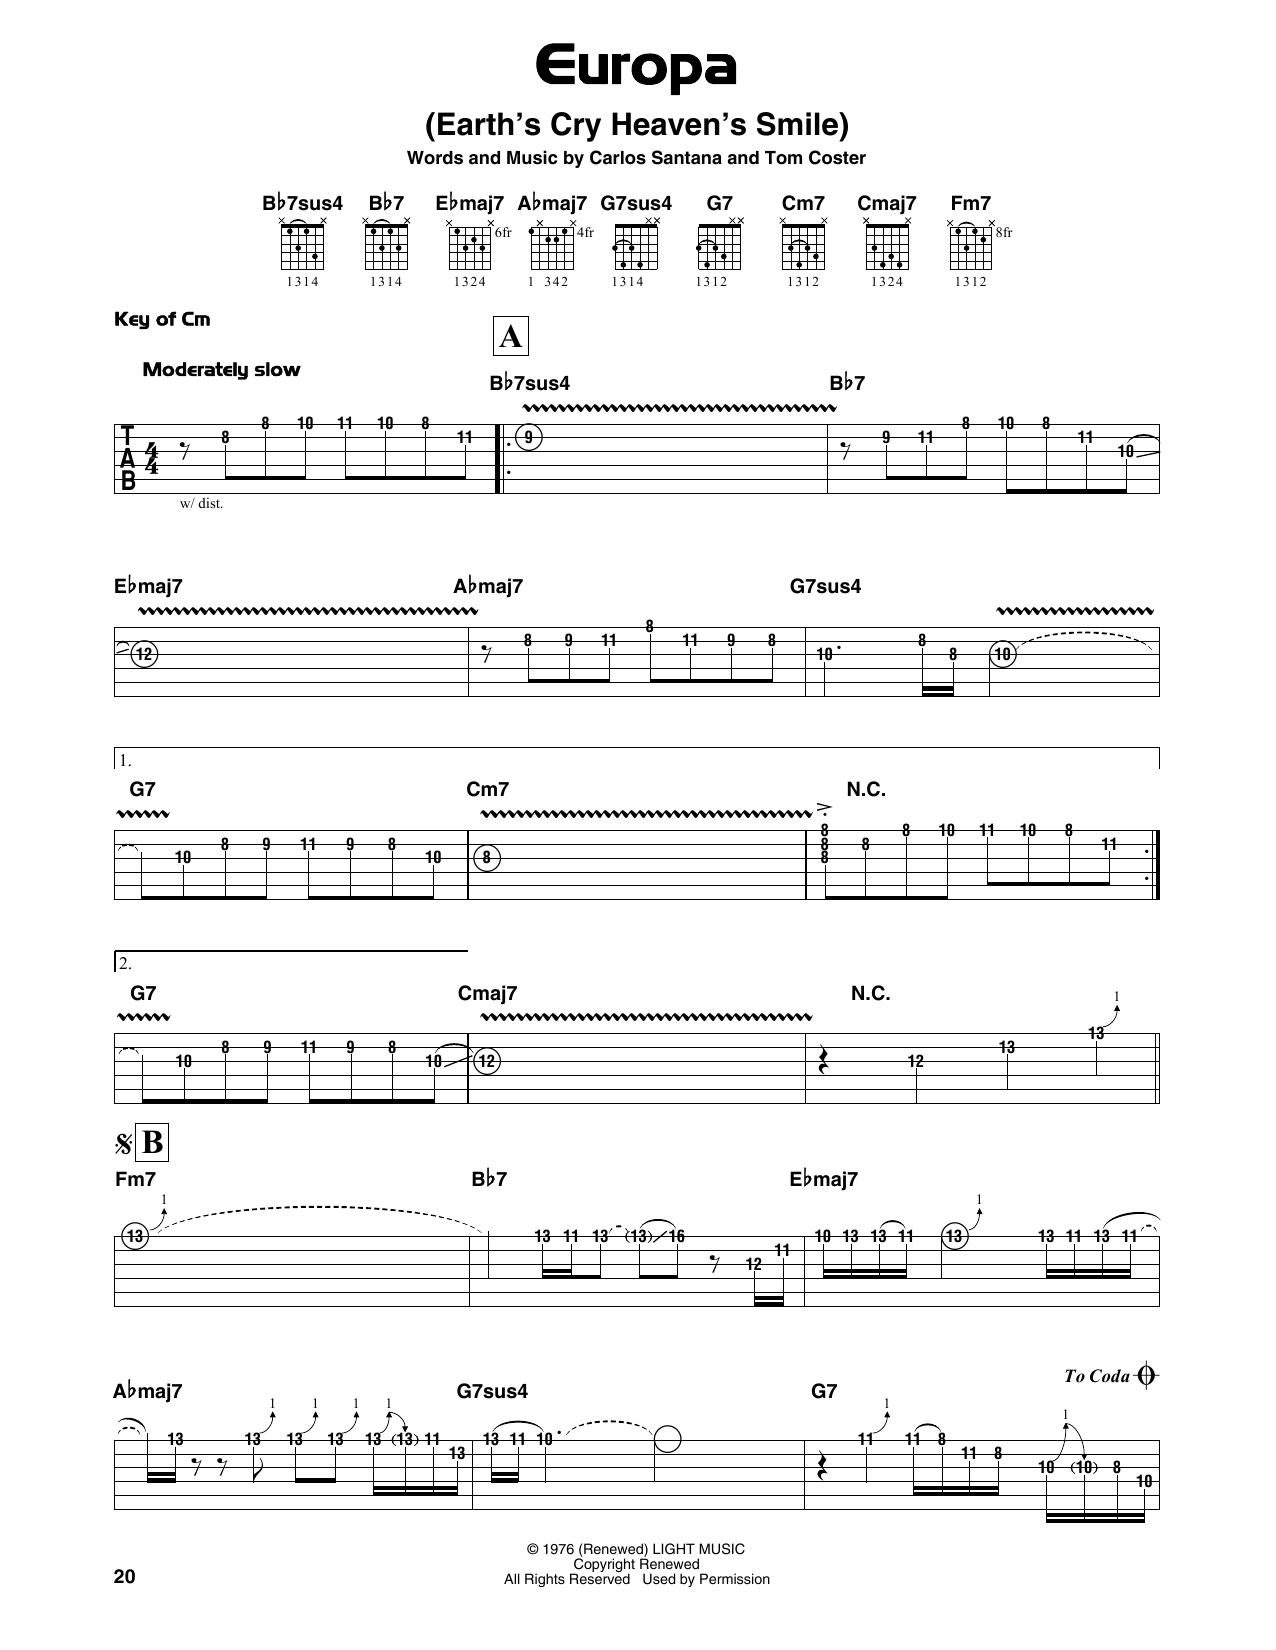 Europa(爵士版)吉他谱 Santana-彼岸吉他 - 一站式吉他爱好者服务平台